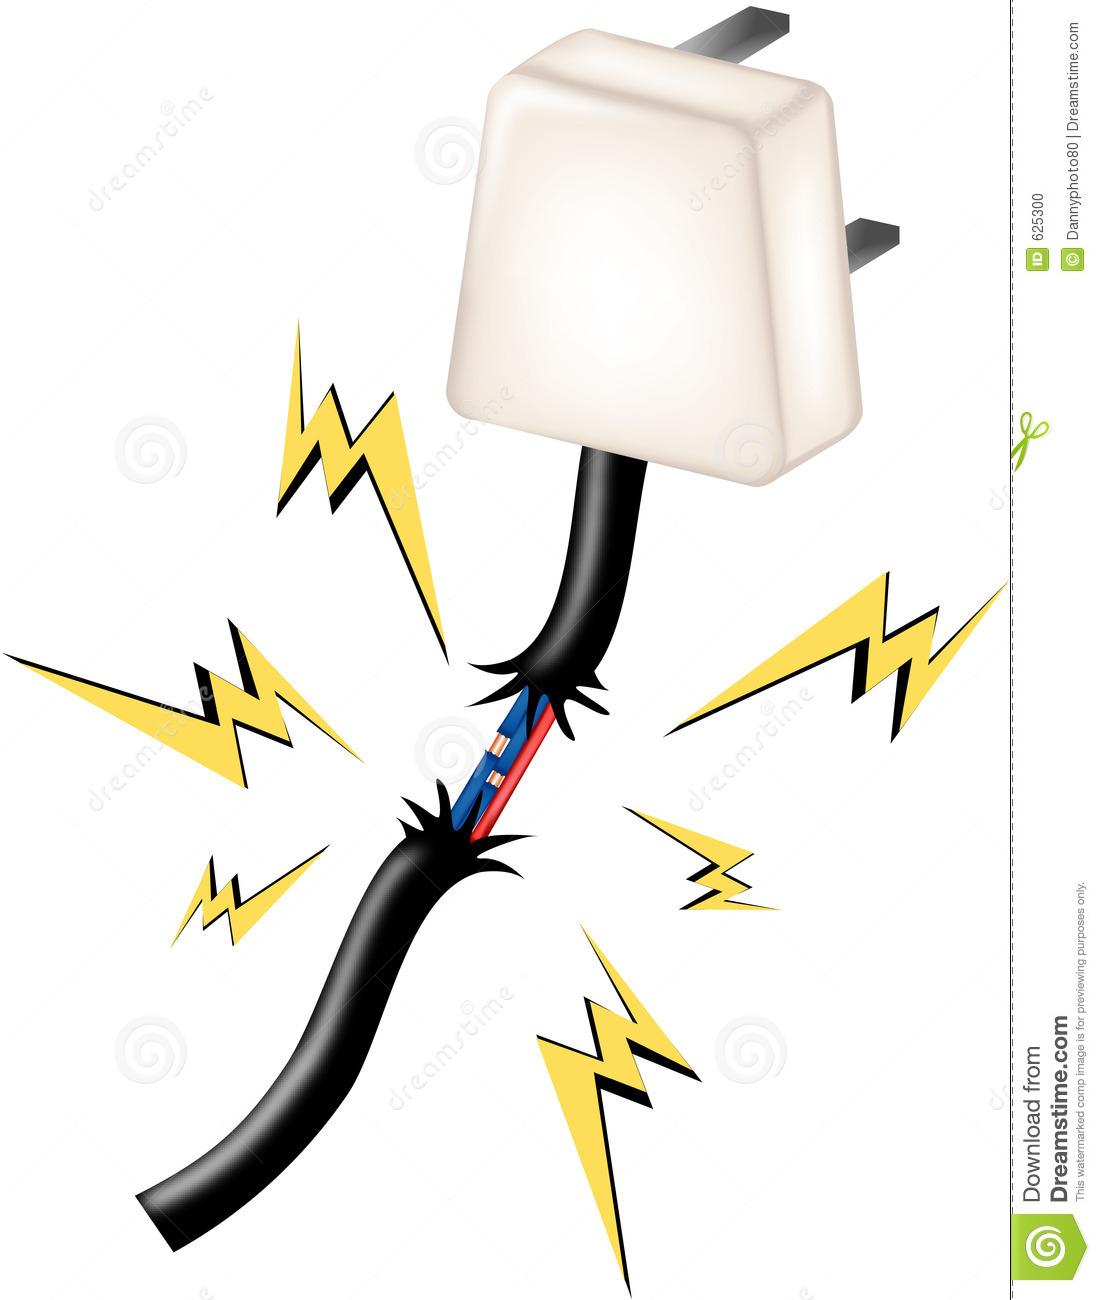 danger clipart electricity